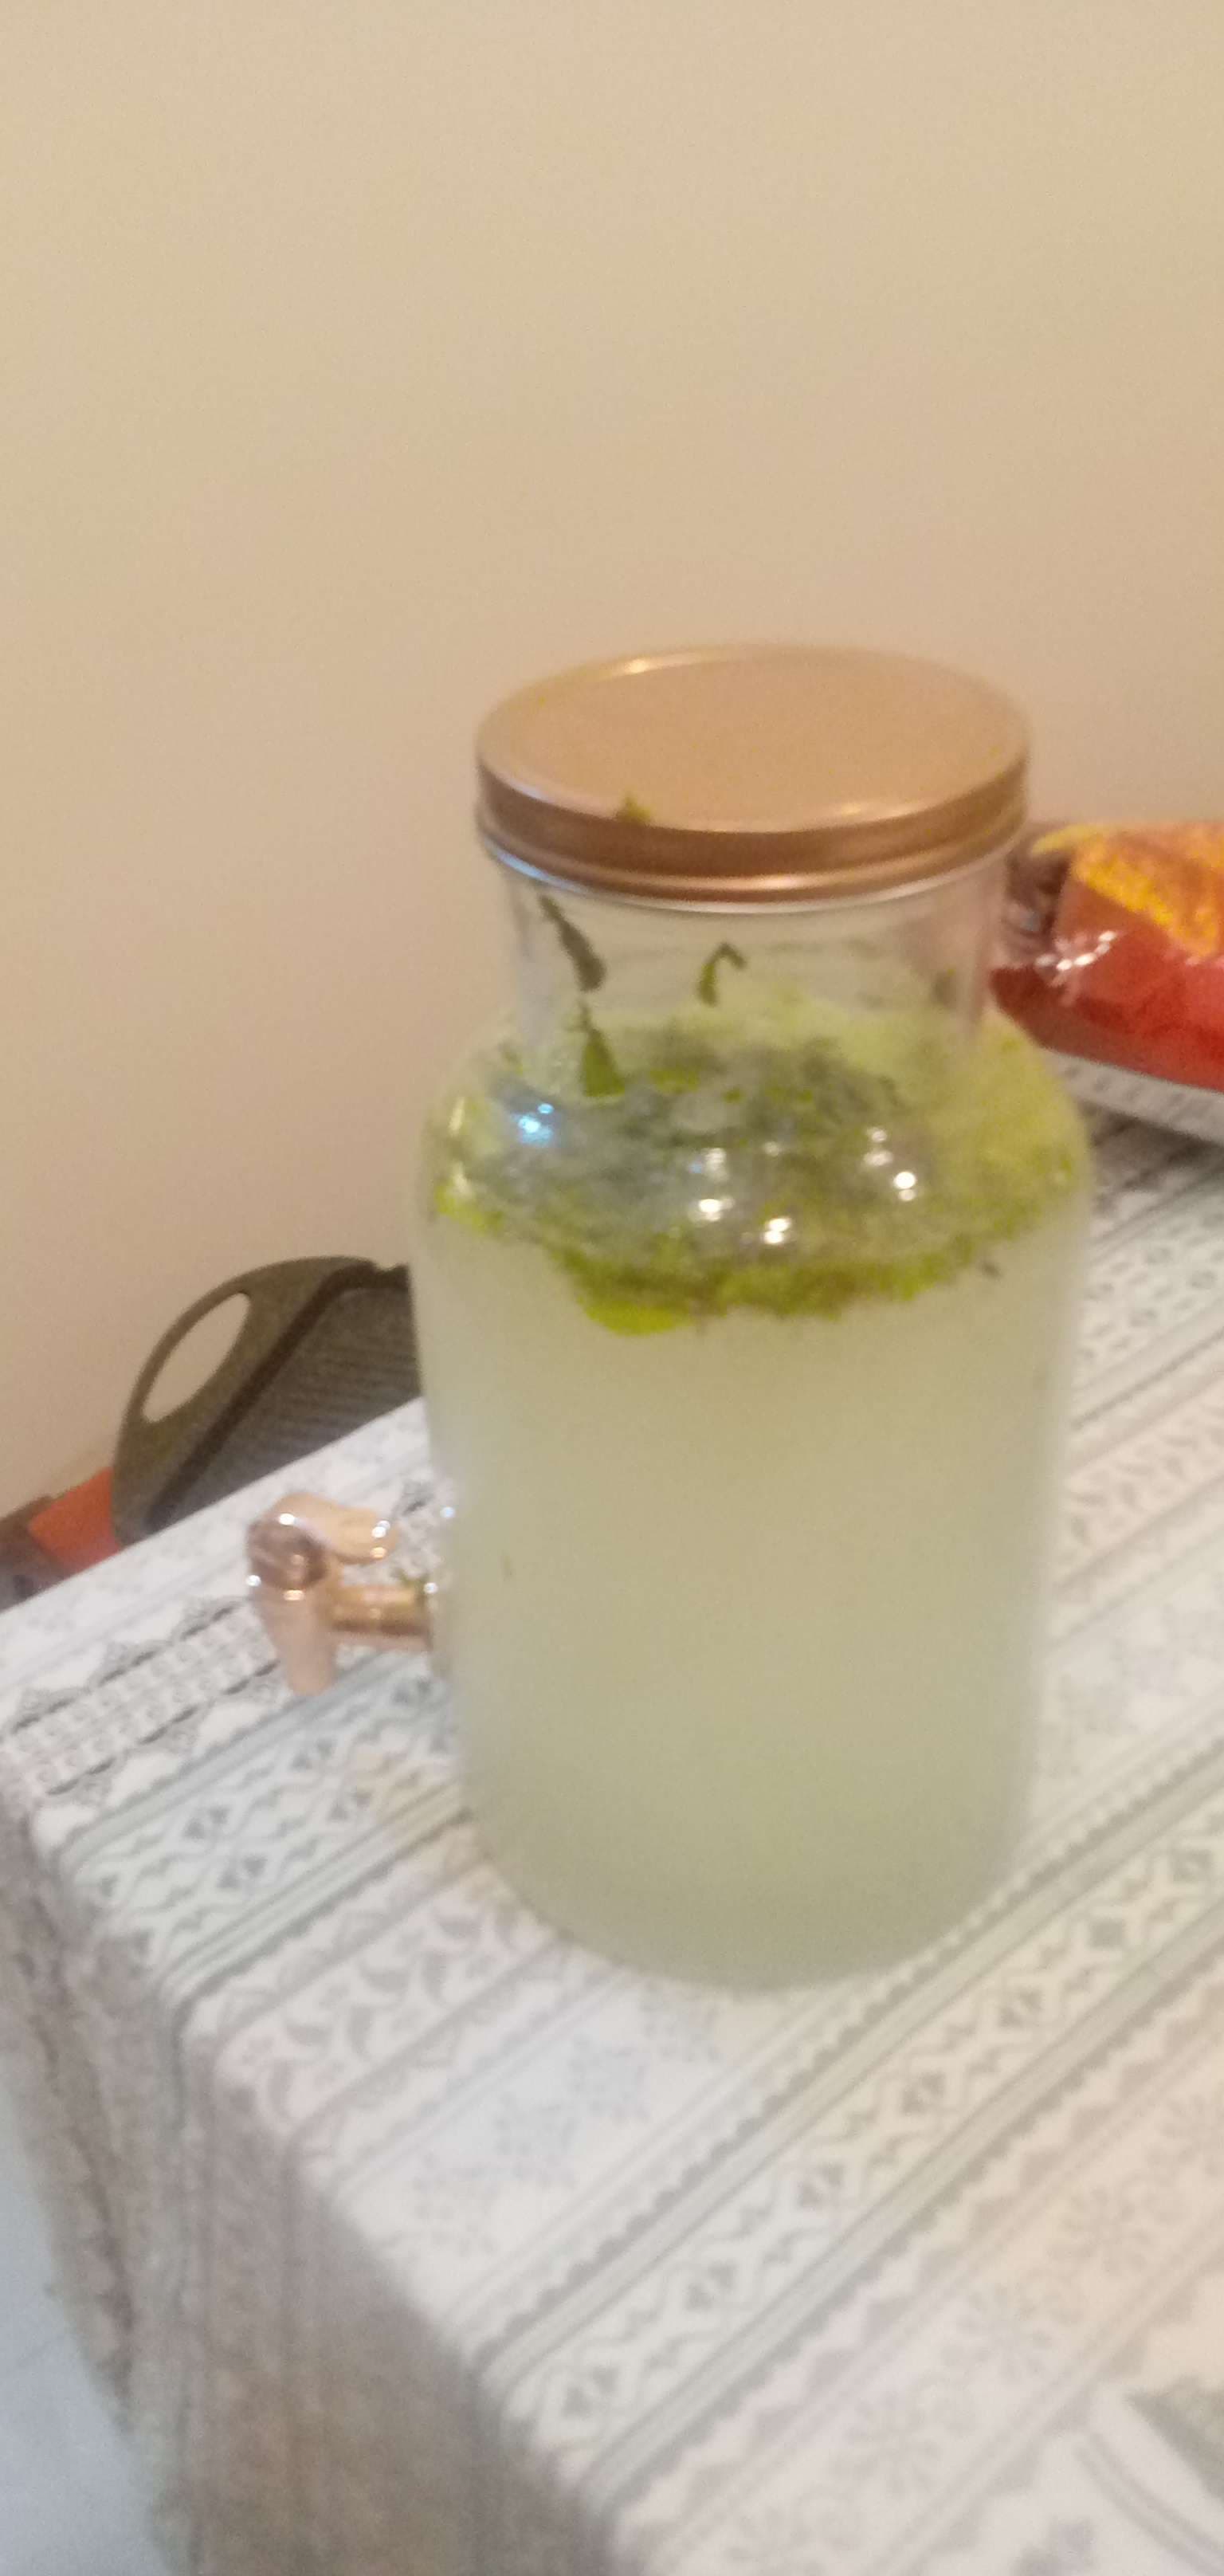 Delicious Lemonade prepared by COOX